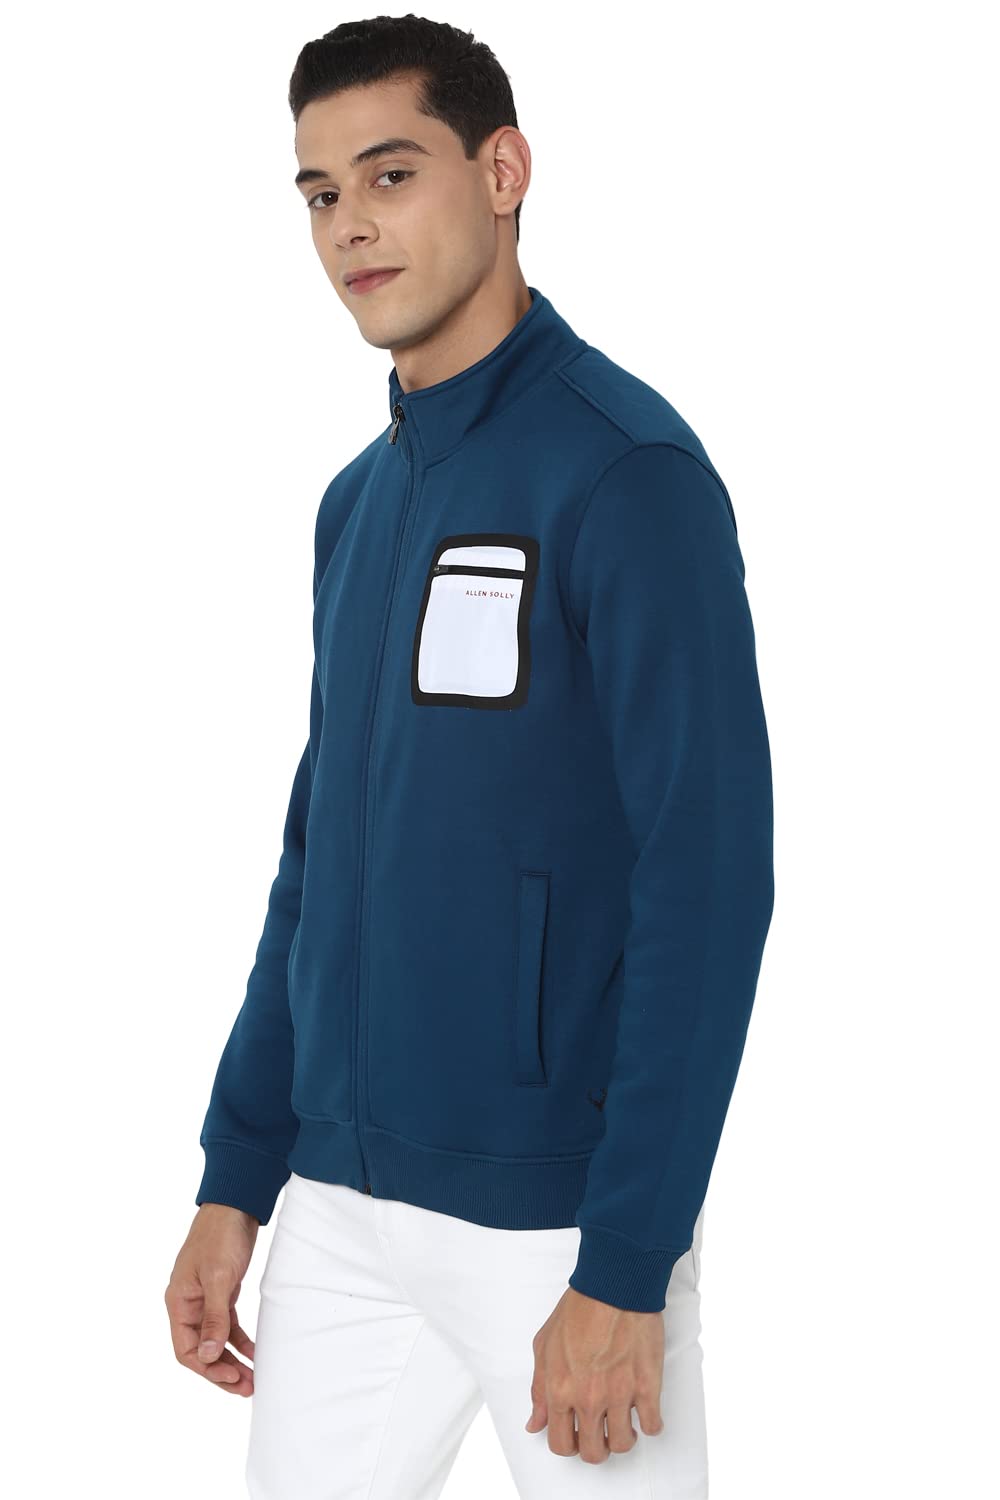 Allen Solly Men's Cotton High Neck Sweatshirt (ASSTFORGF241849_Blue_XL) 